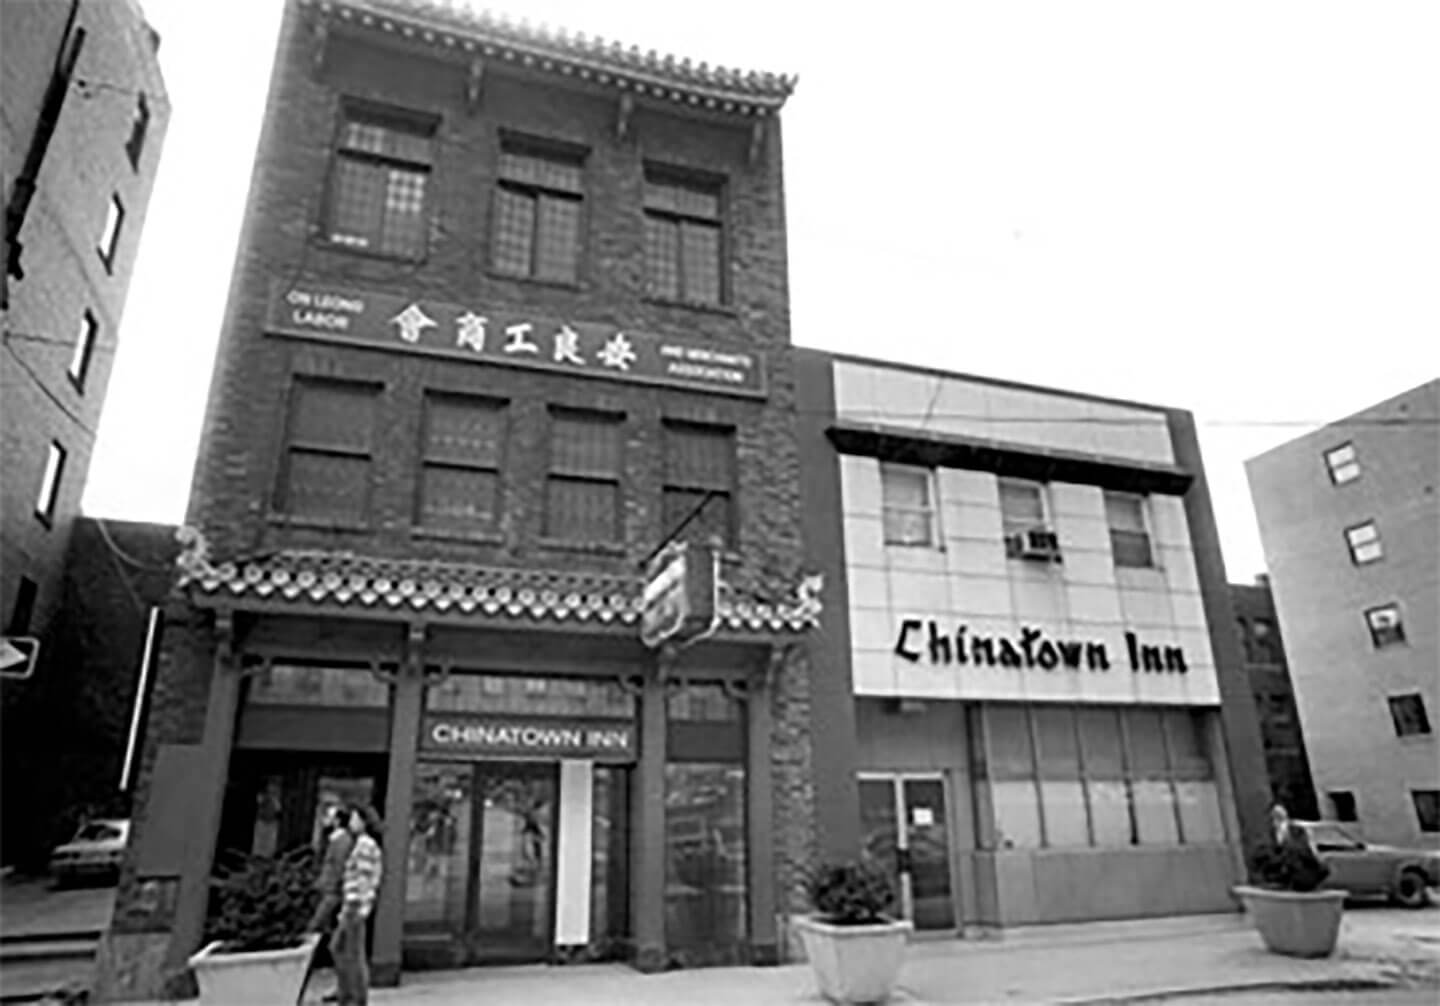 Chinatown Inn